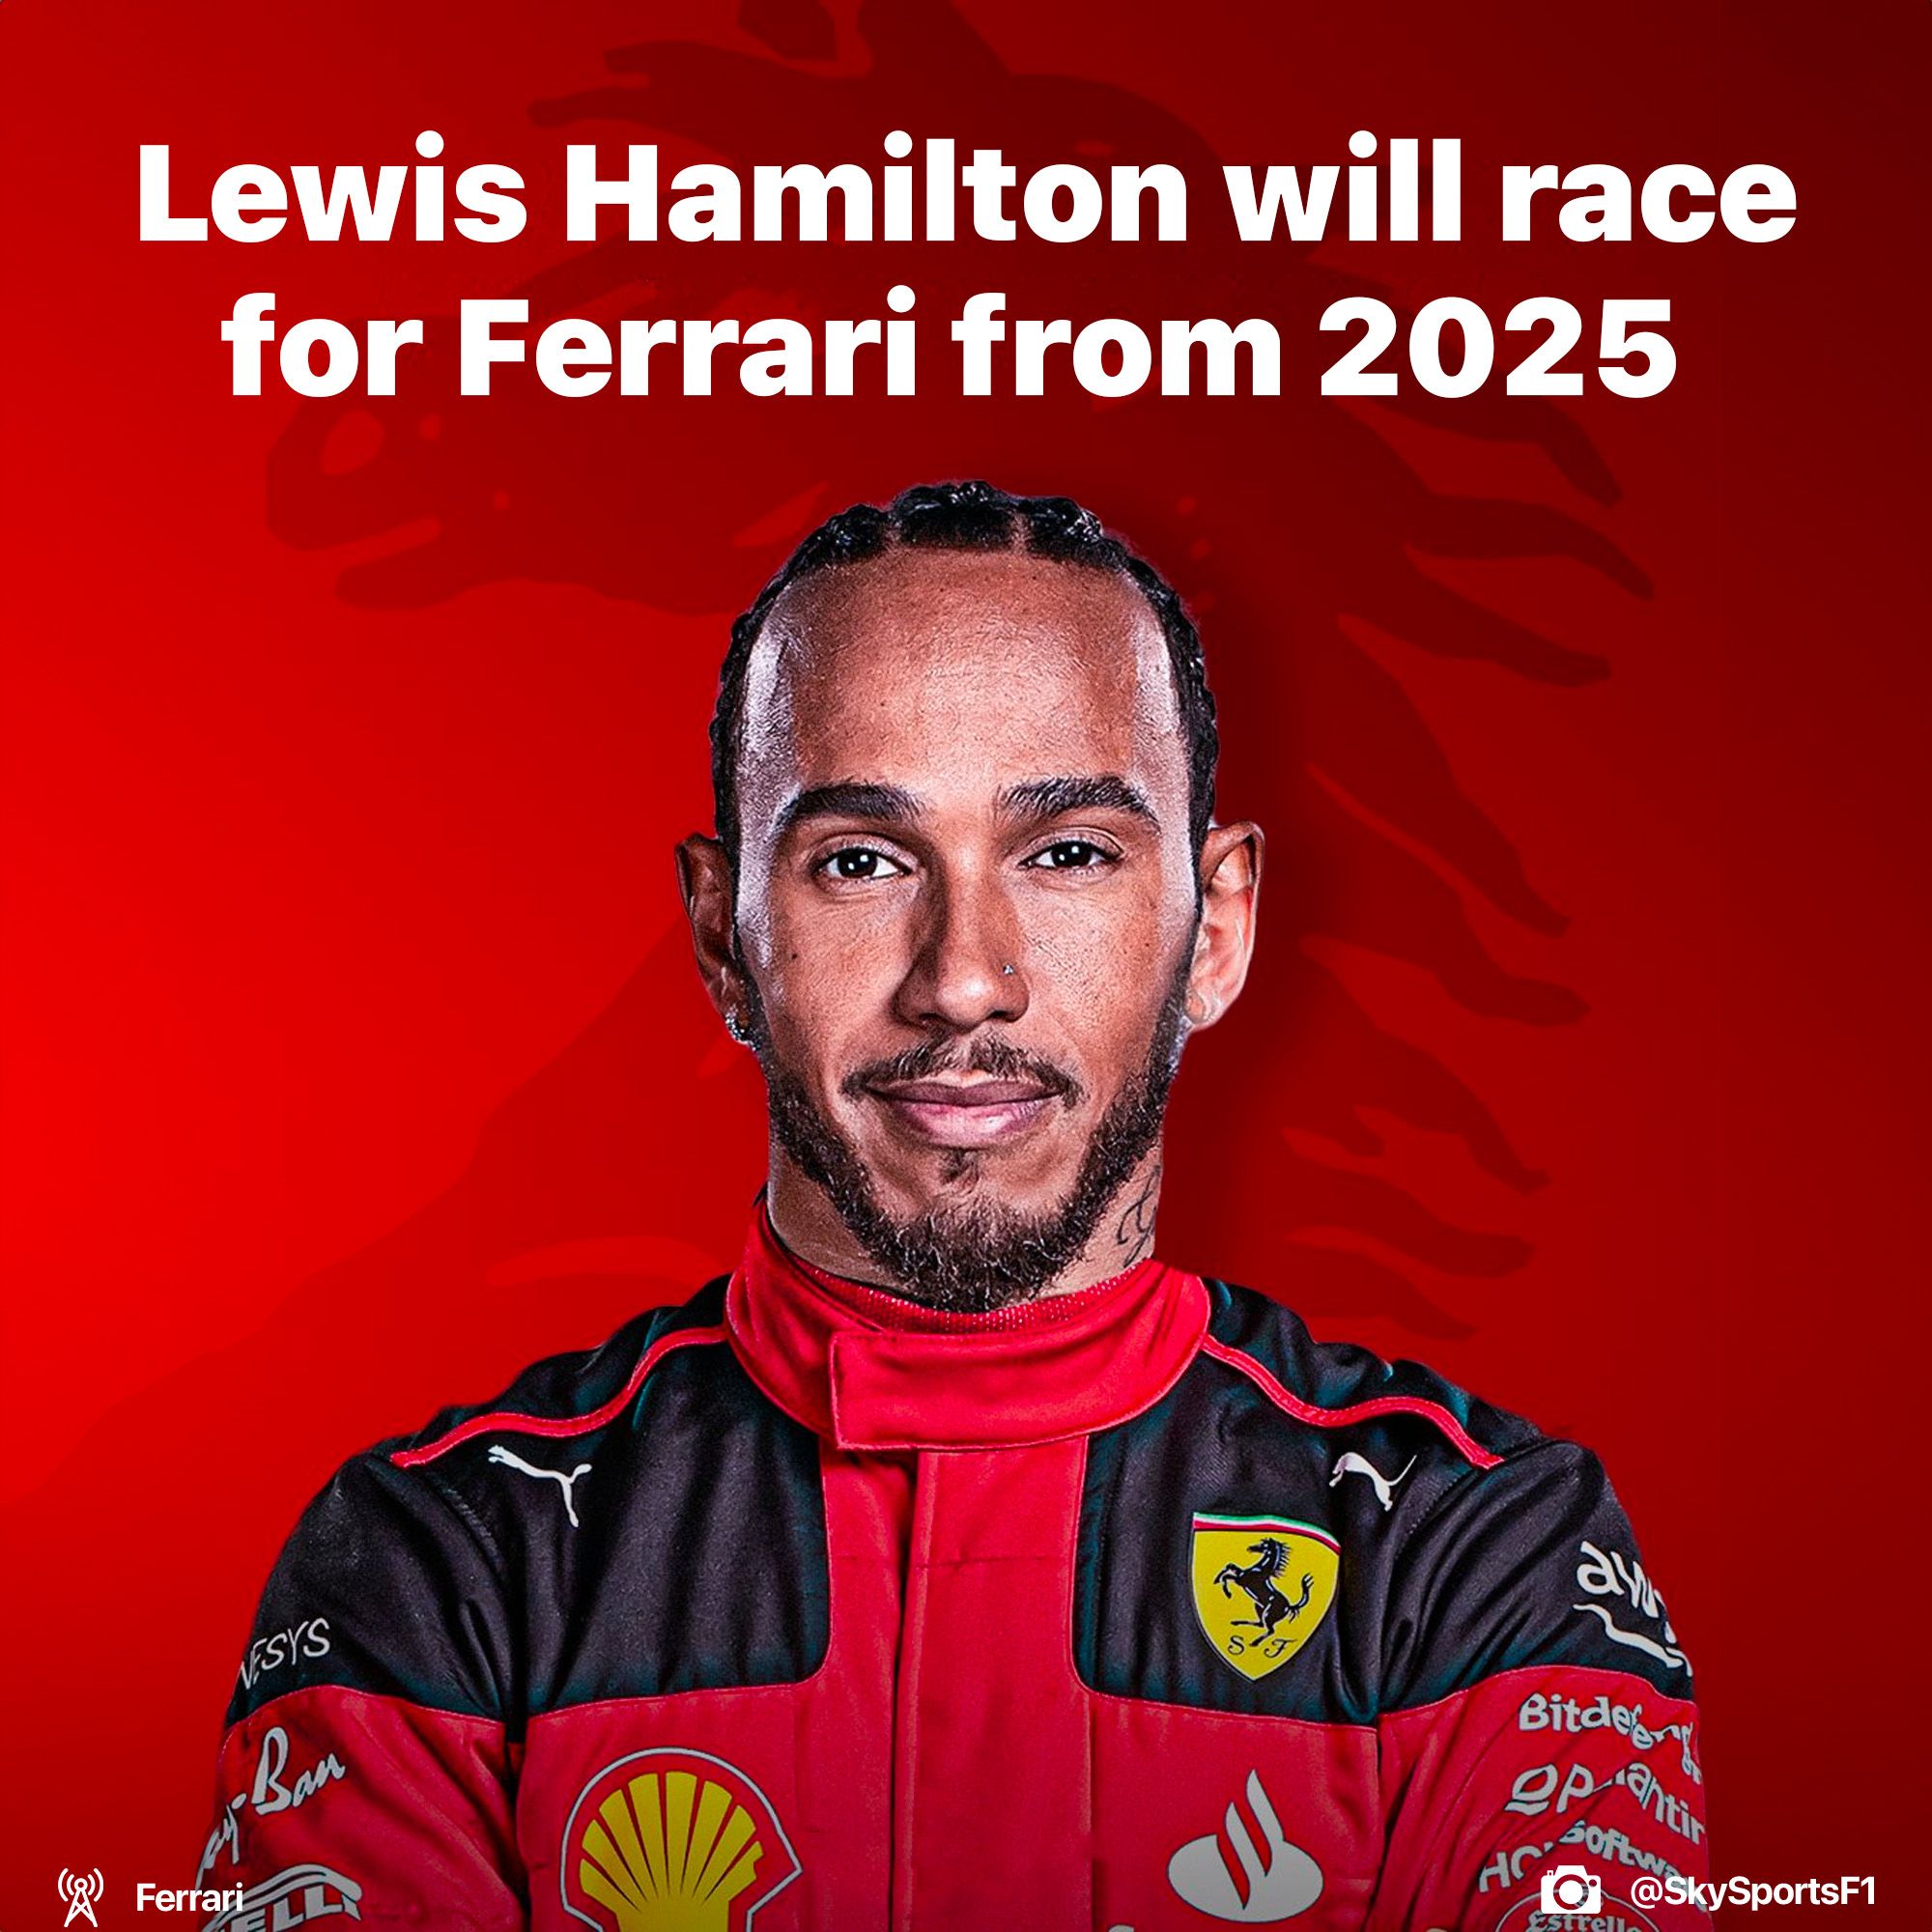 Lewis Hamilton joins Ferrari in 2025